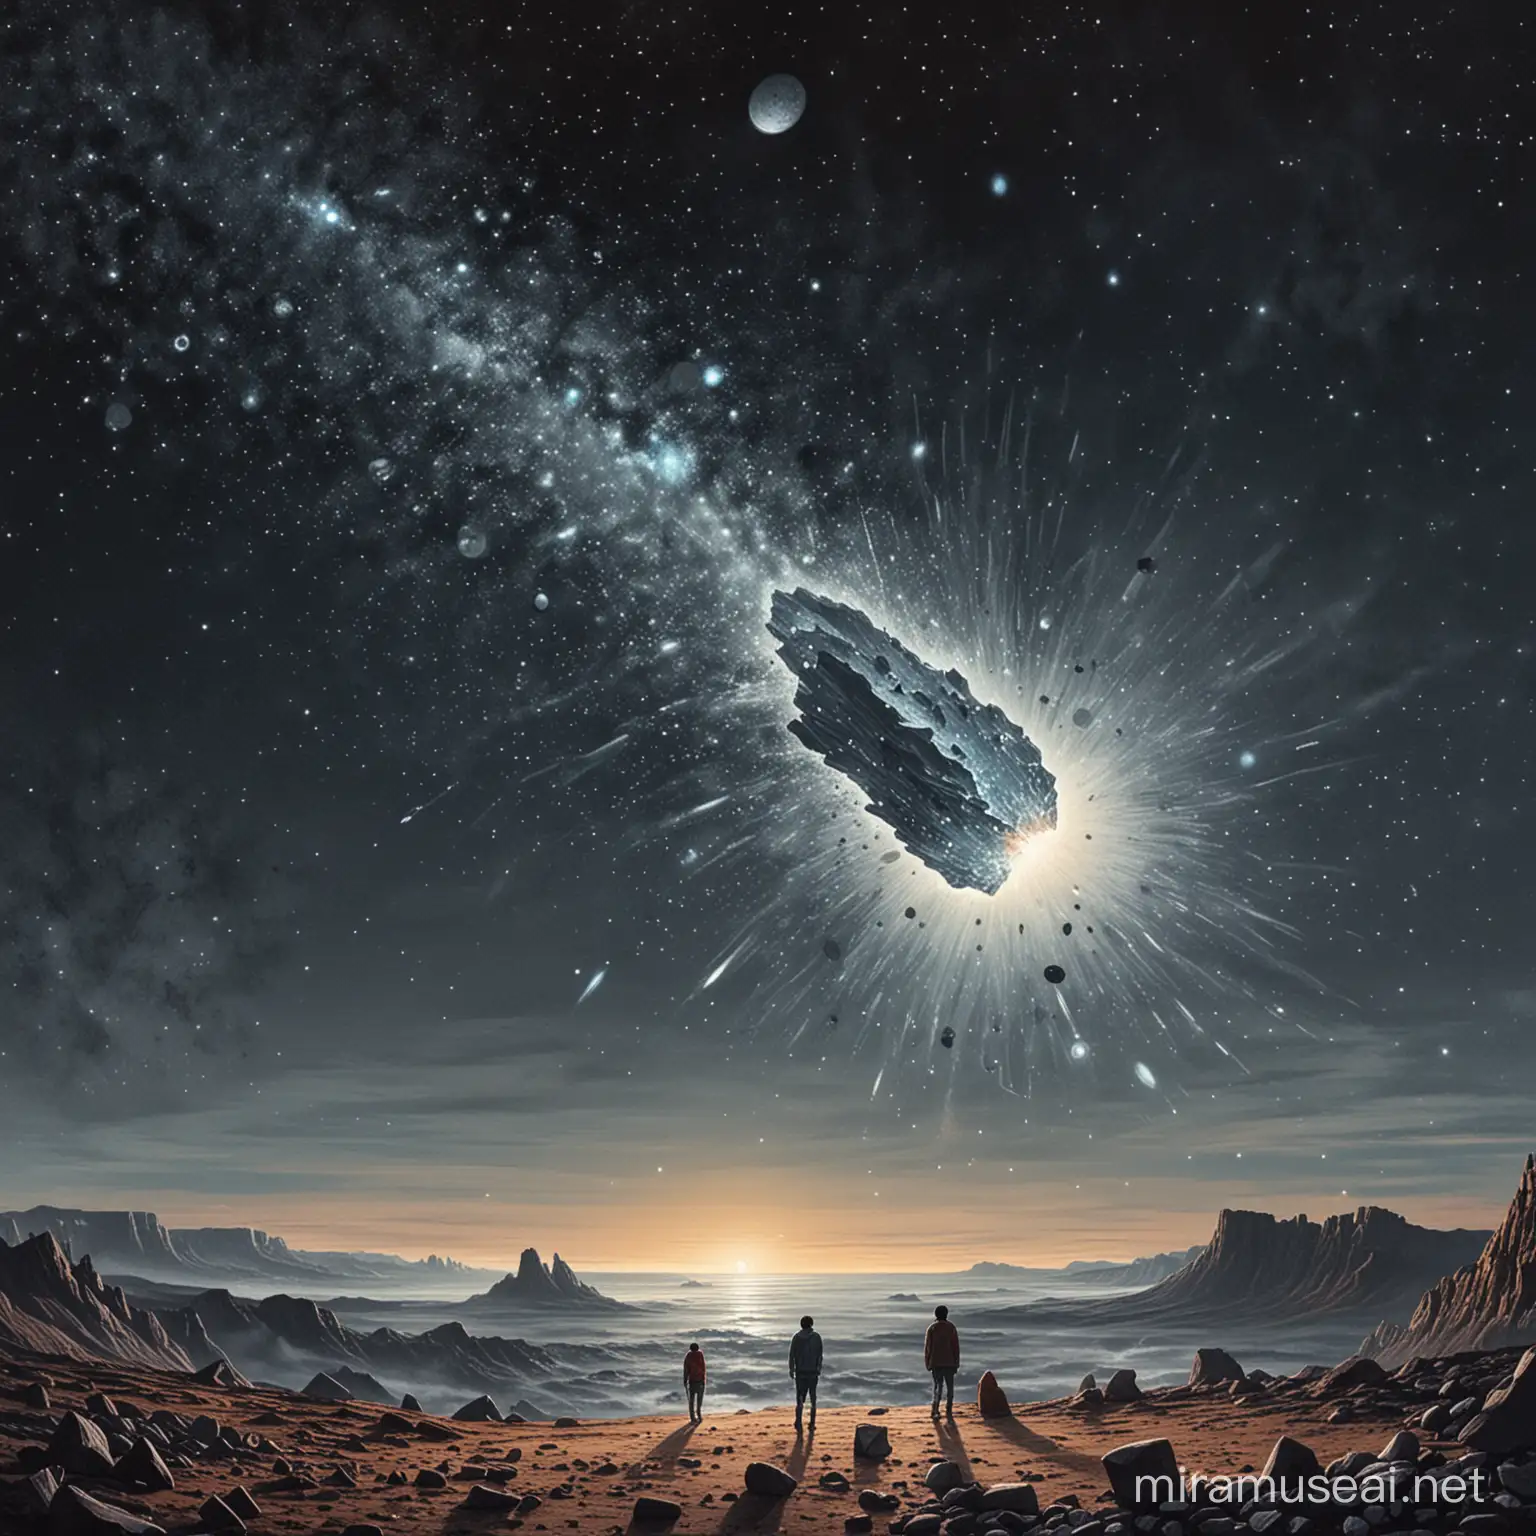 Astounding Comet Collides with Moon Astonishing Spectators